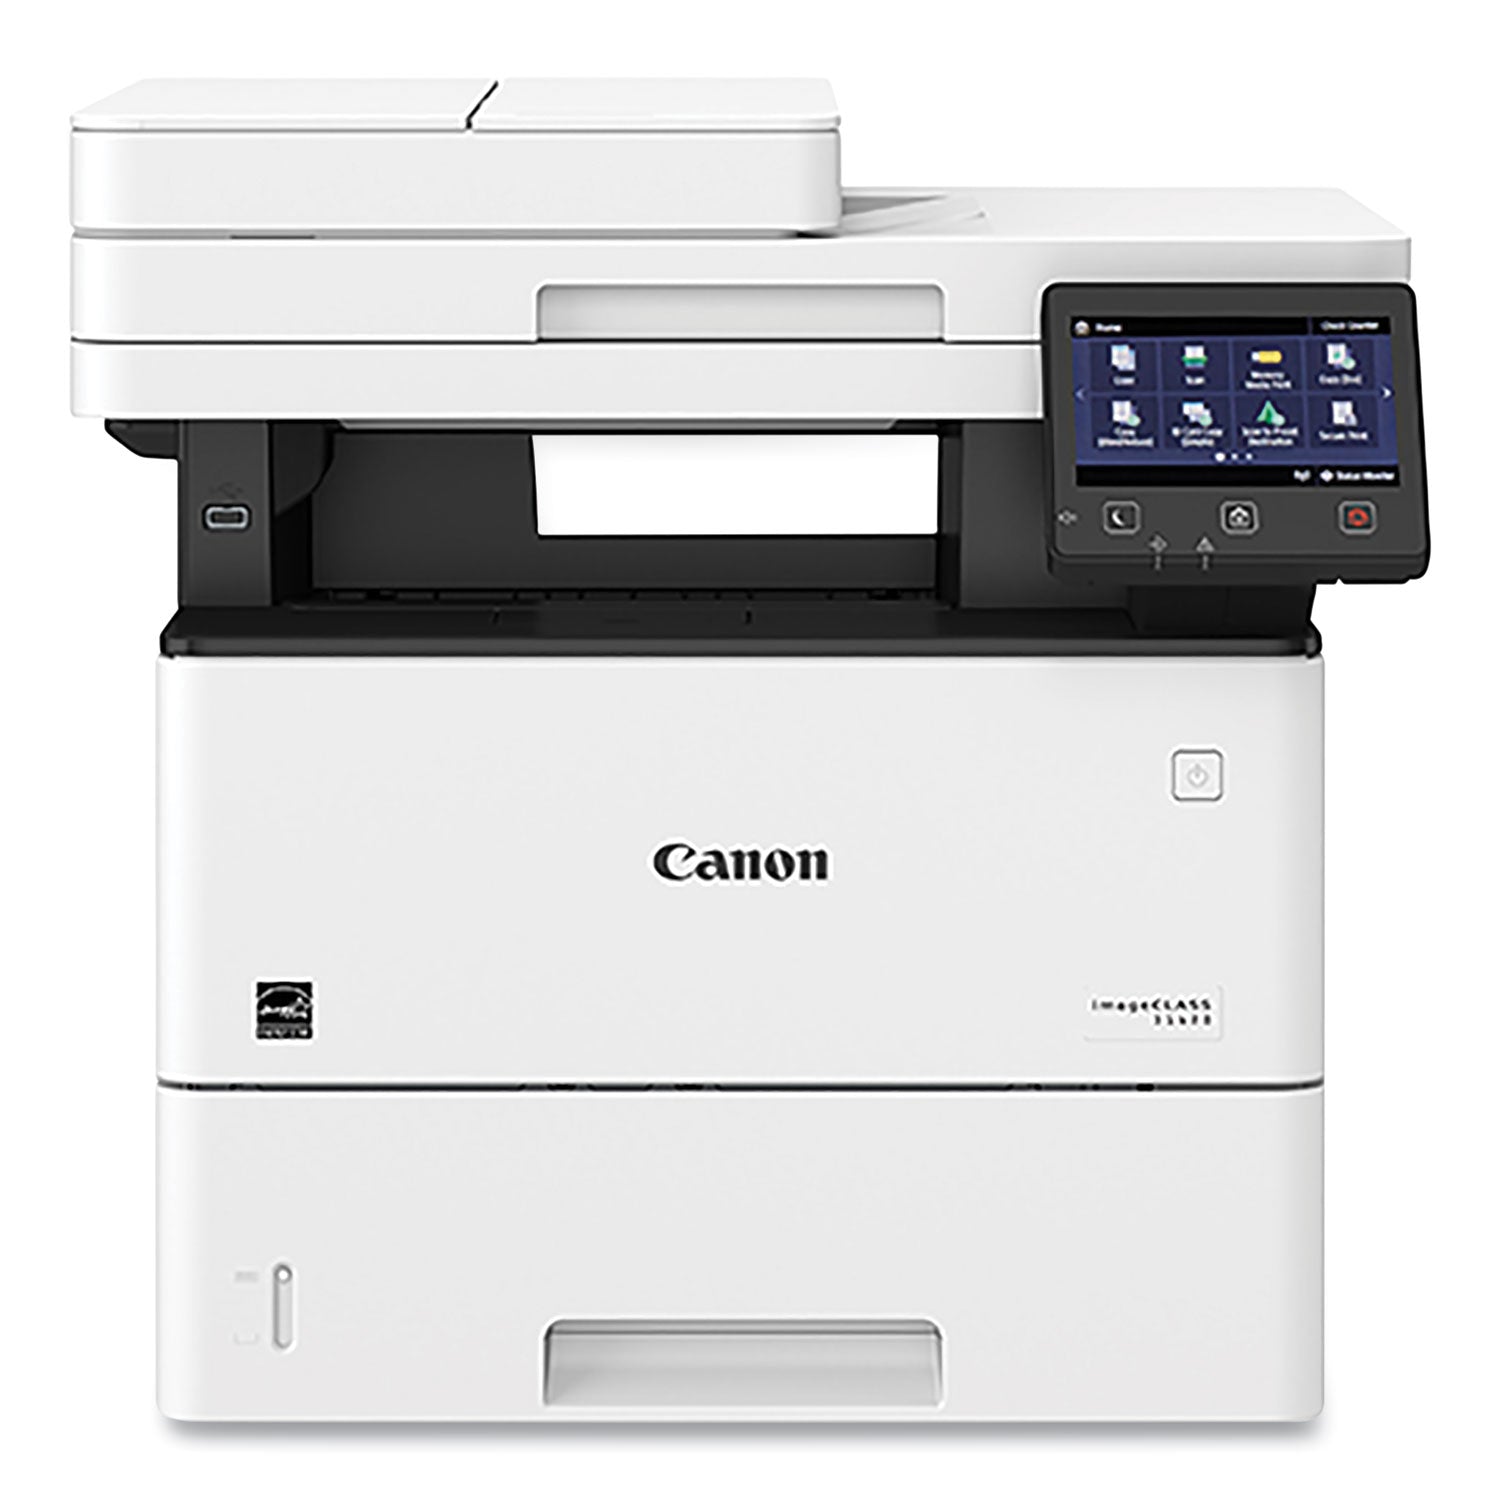 imageclass-d1620-wireless-multifunction-laser-printer-copy-print-scan_cnm2223c024 - 1